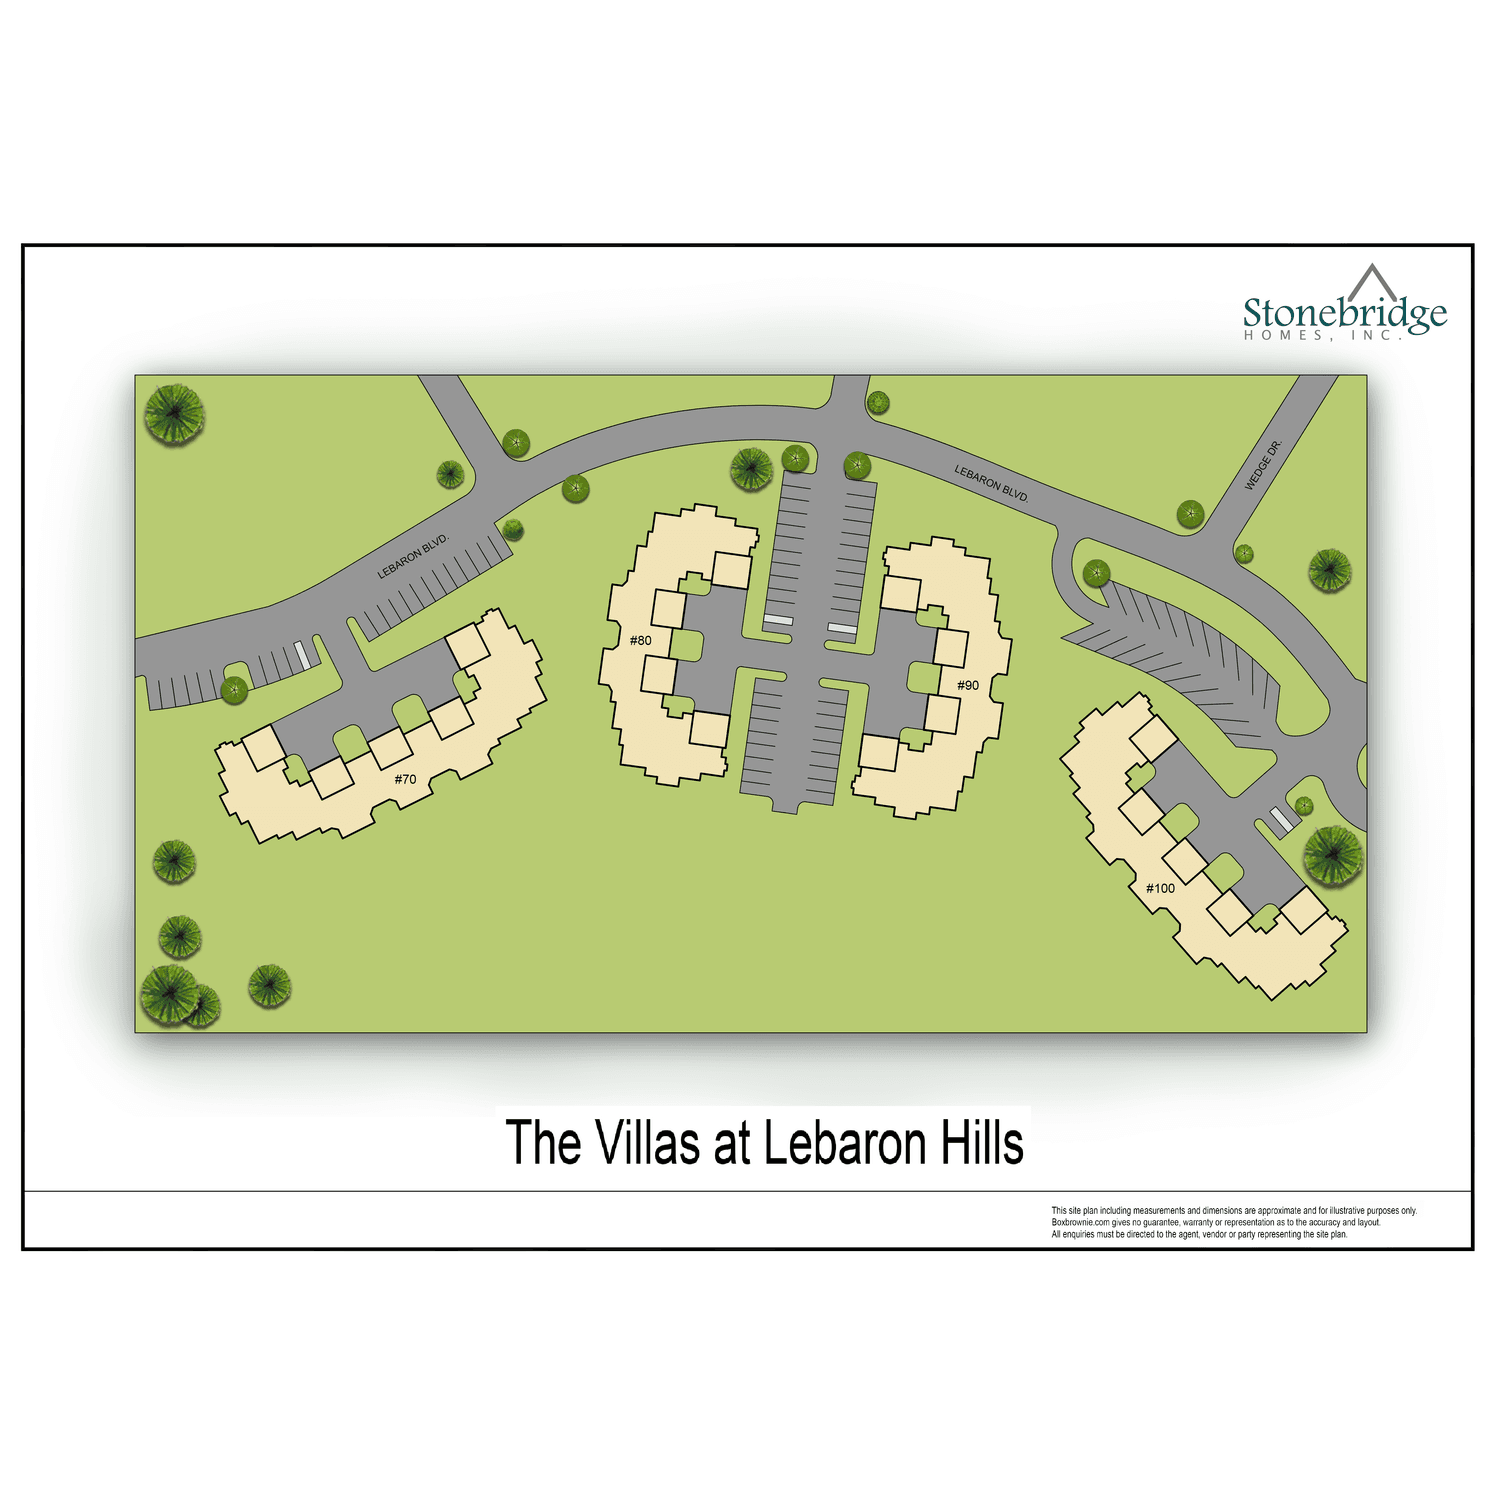 The Villas at Lebaron Hills building at 10 Wedge Drive, Lakeville, MA 02347